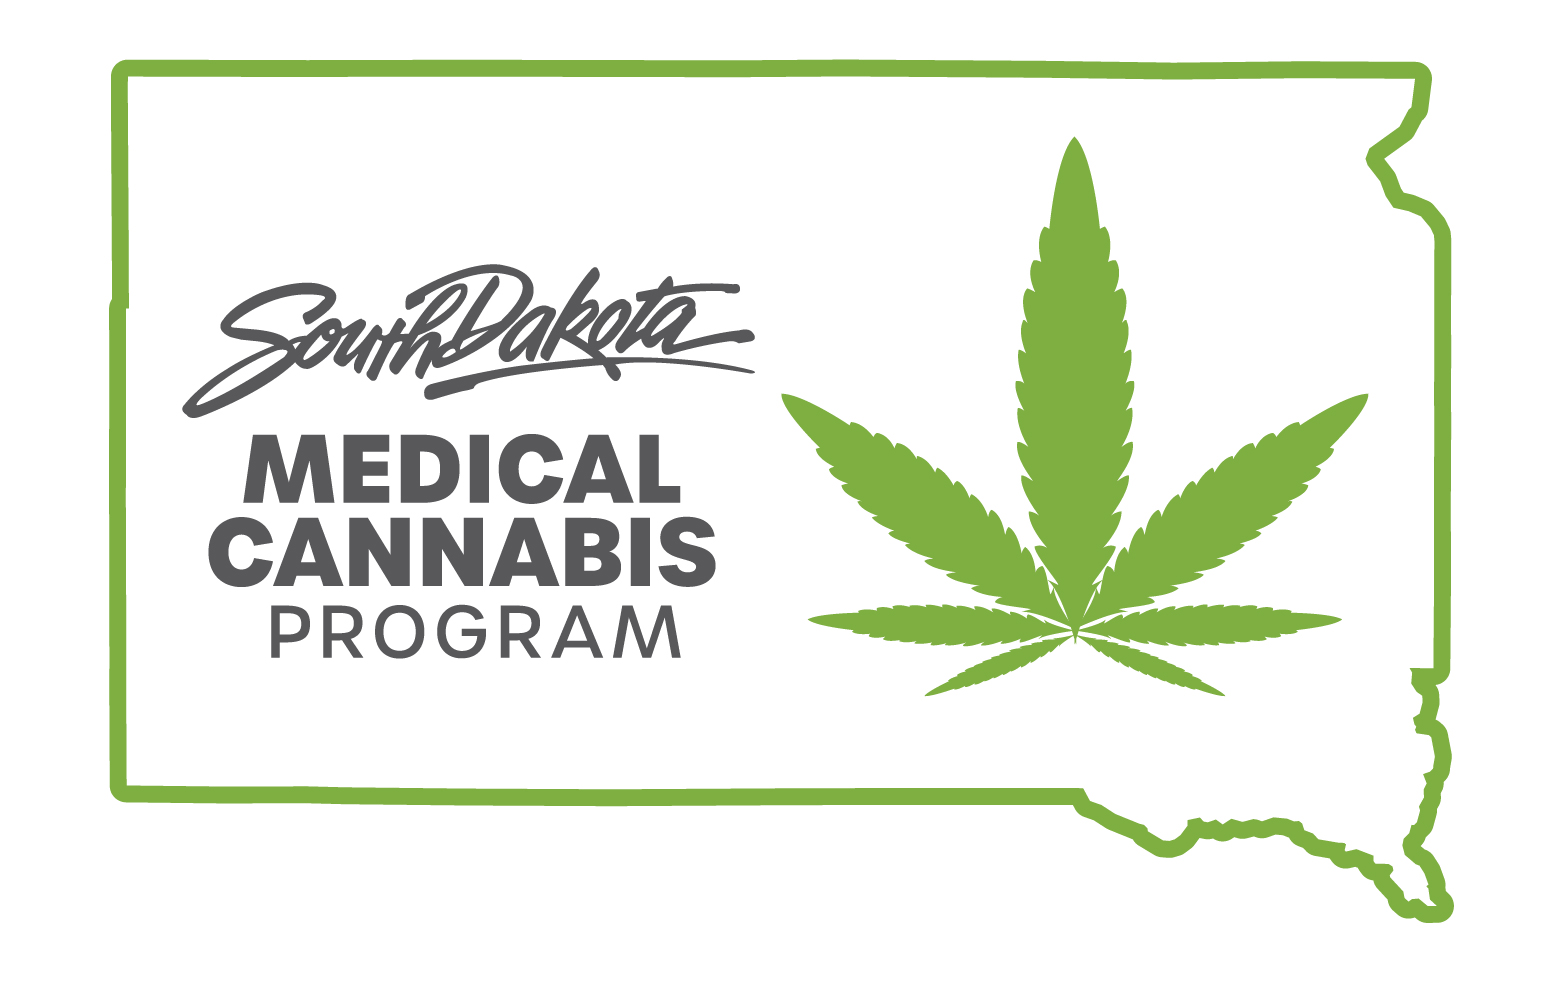 South Dakota Medical Cannabis Program